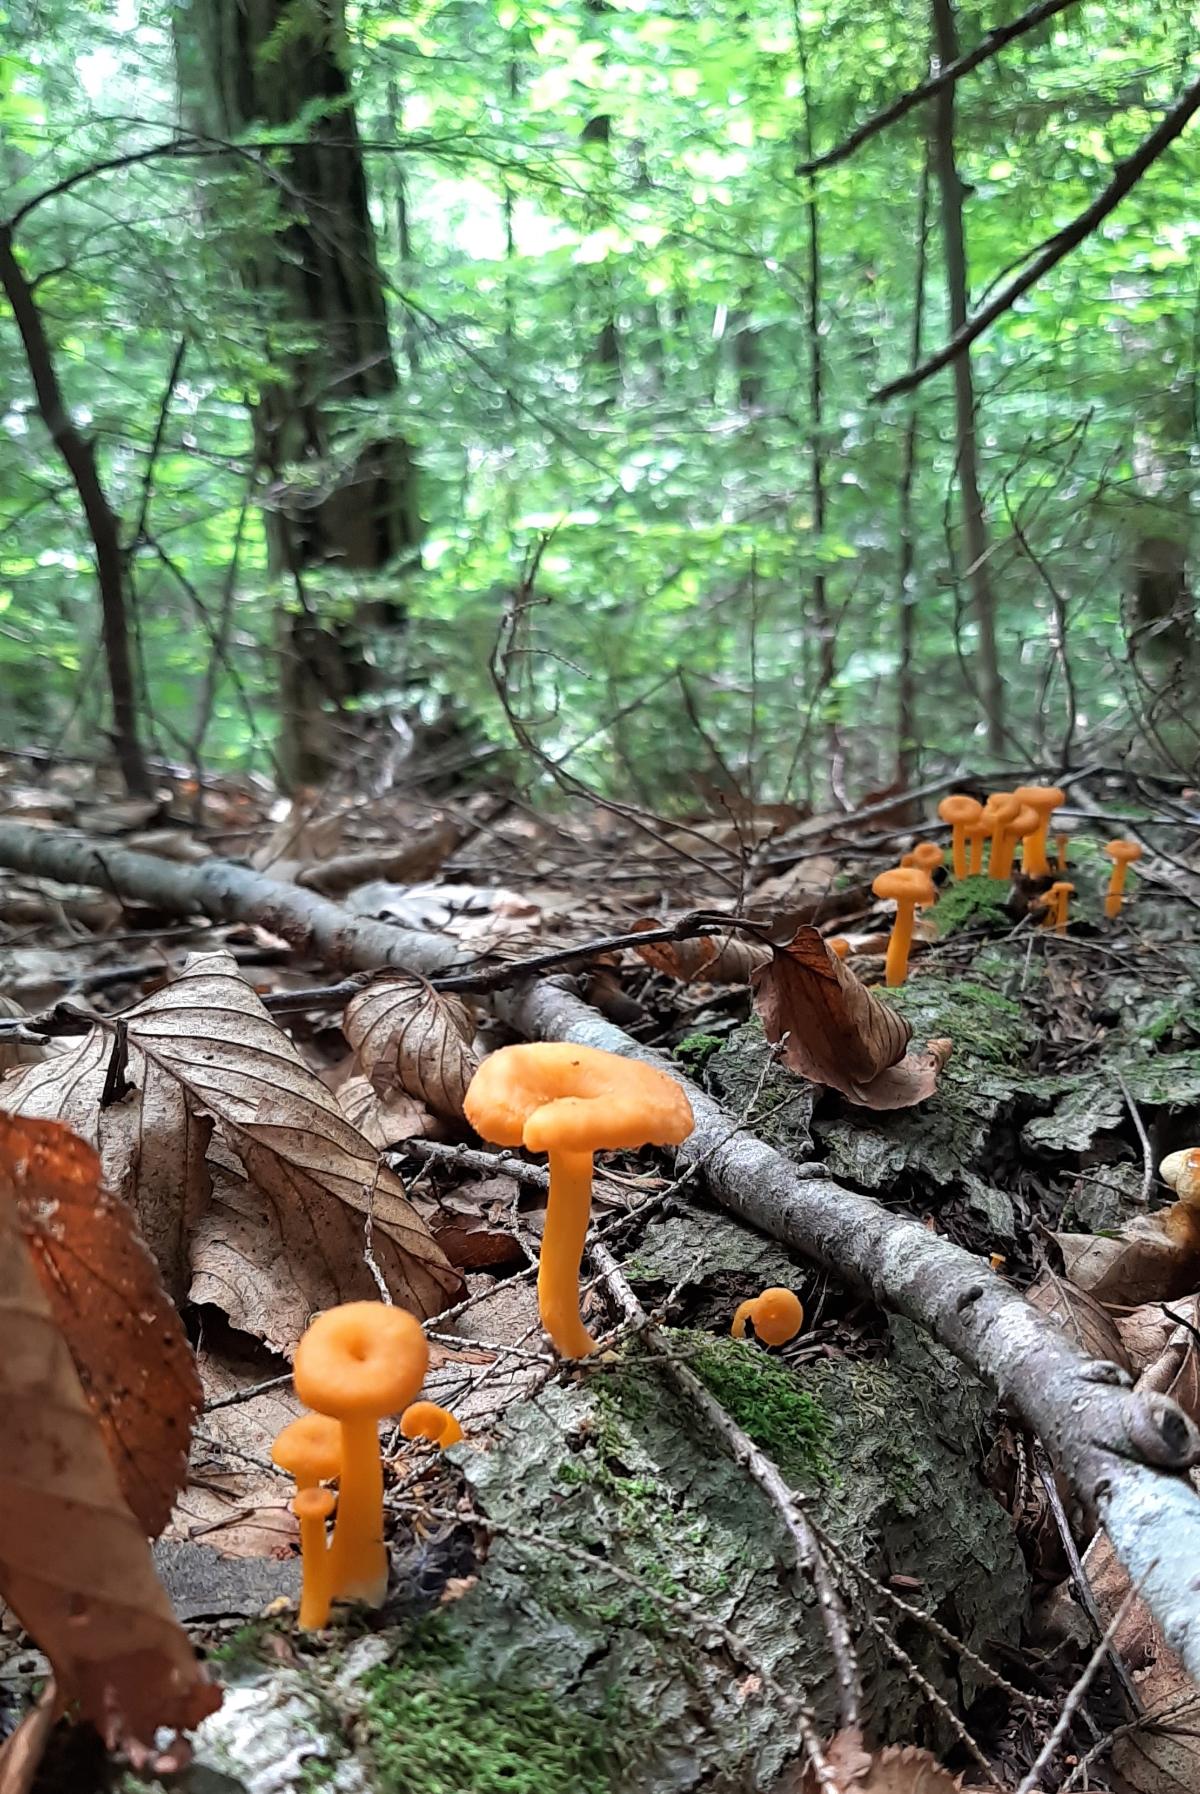 A marching group of yellowfoot chanterelle mushrooms.